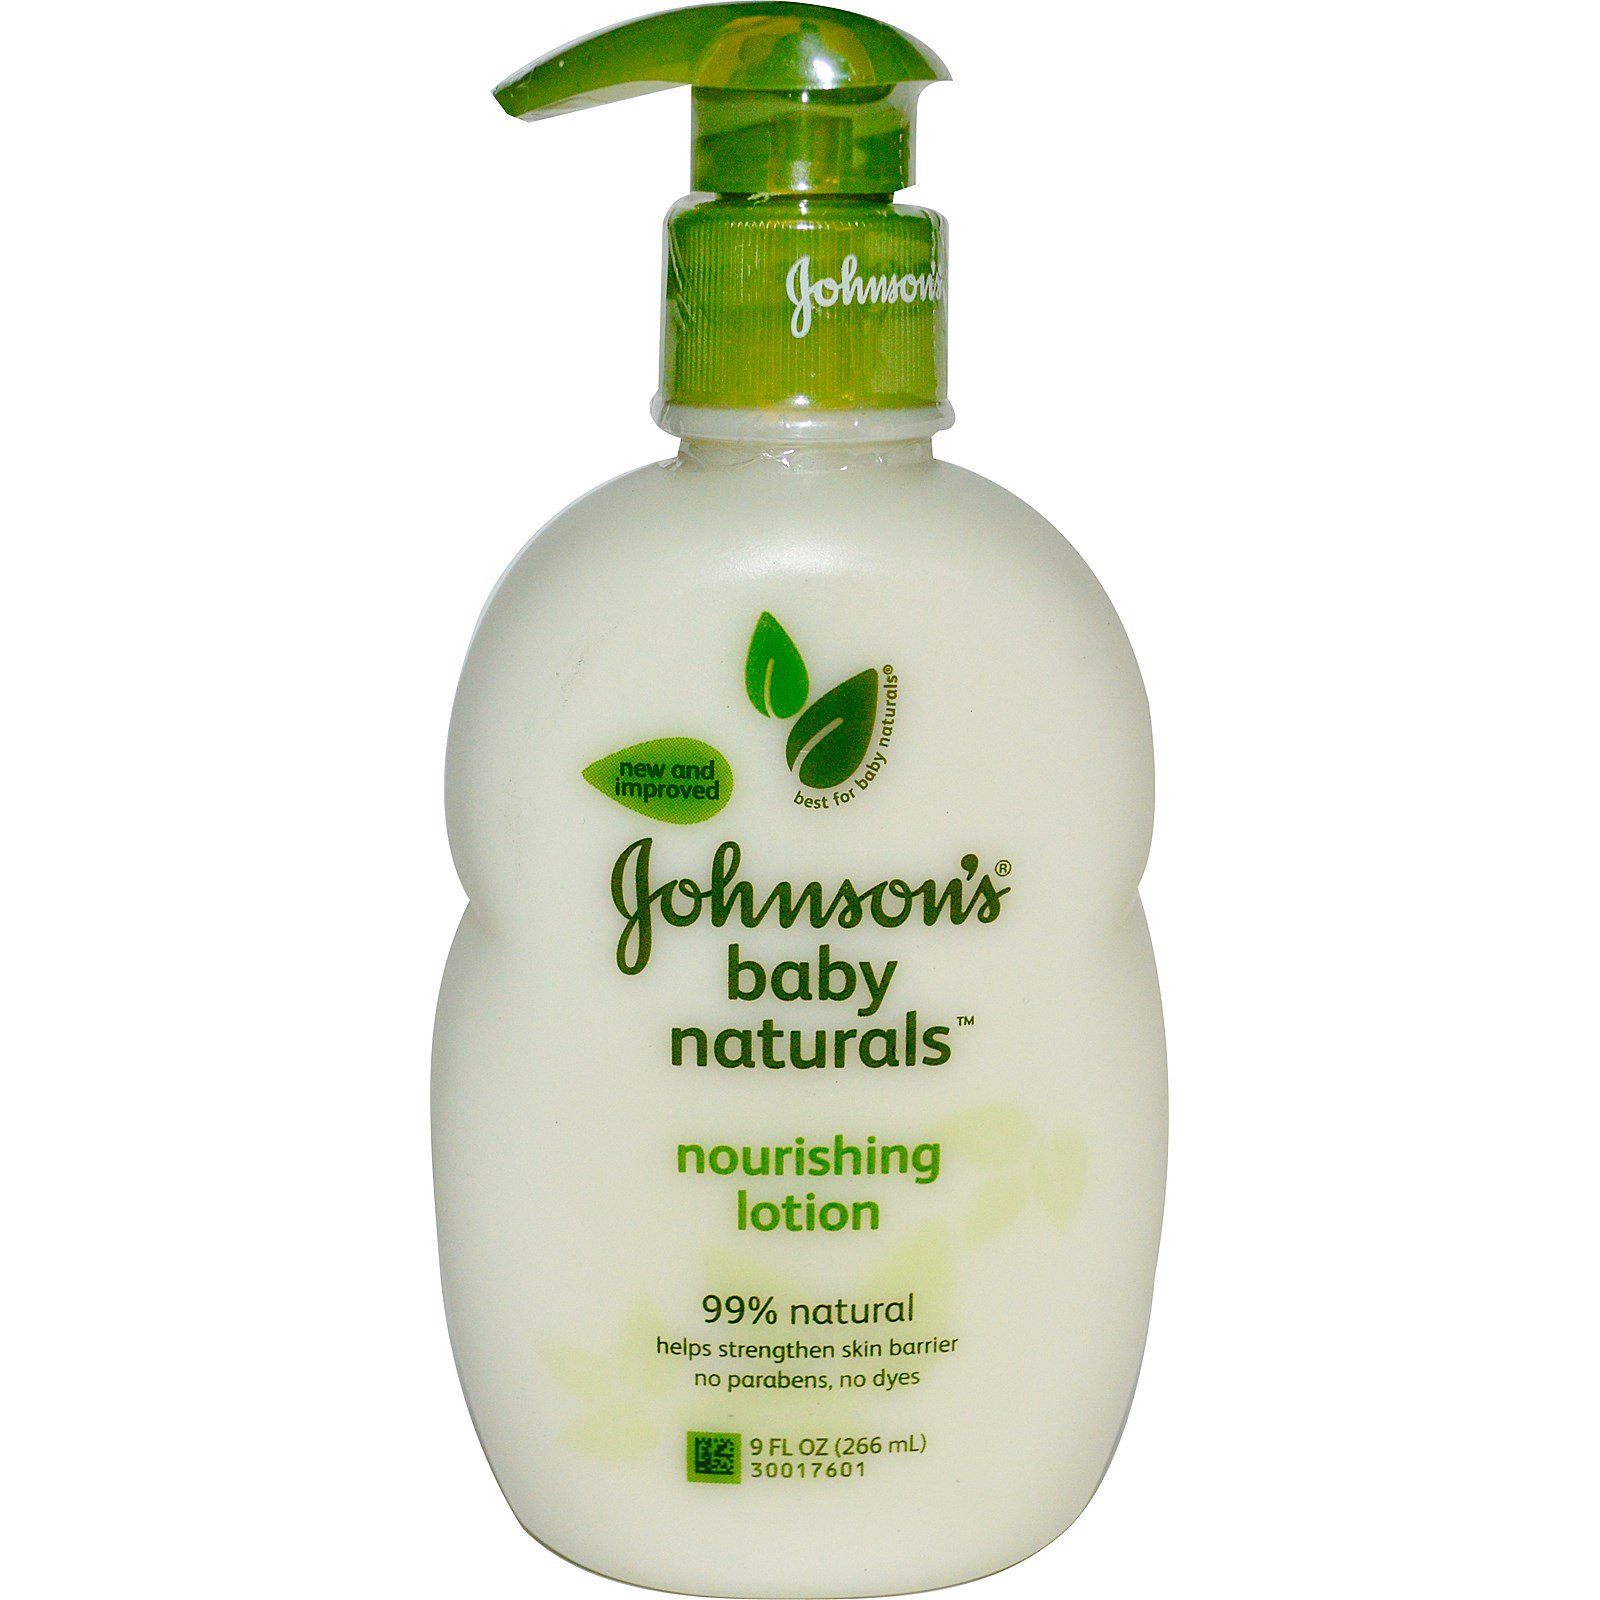 green johnson and johnson baby lotion